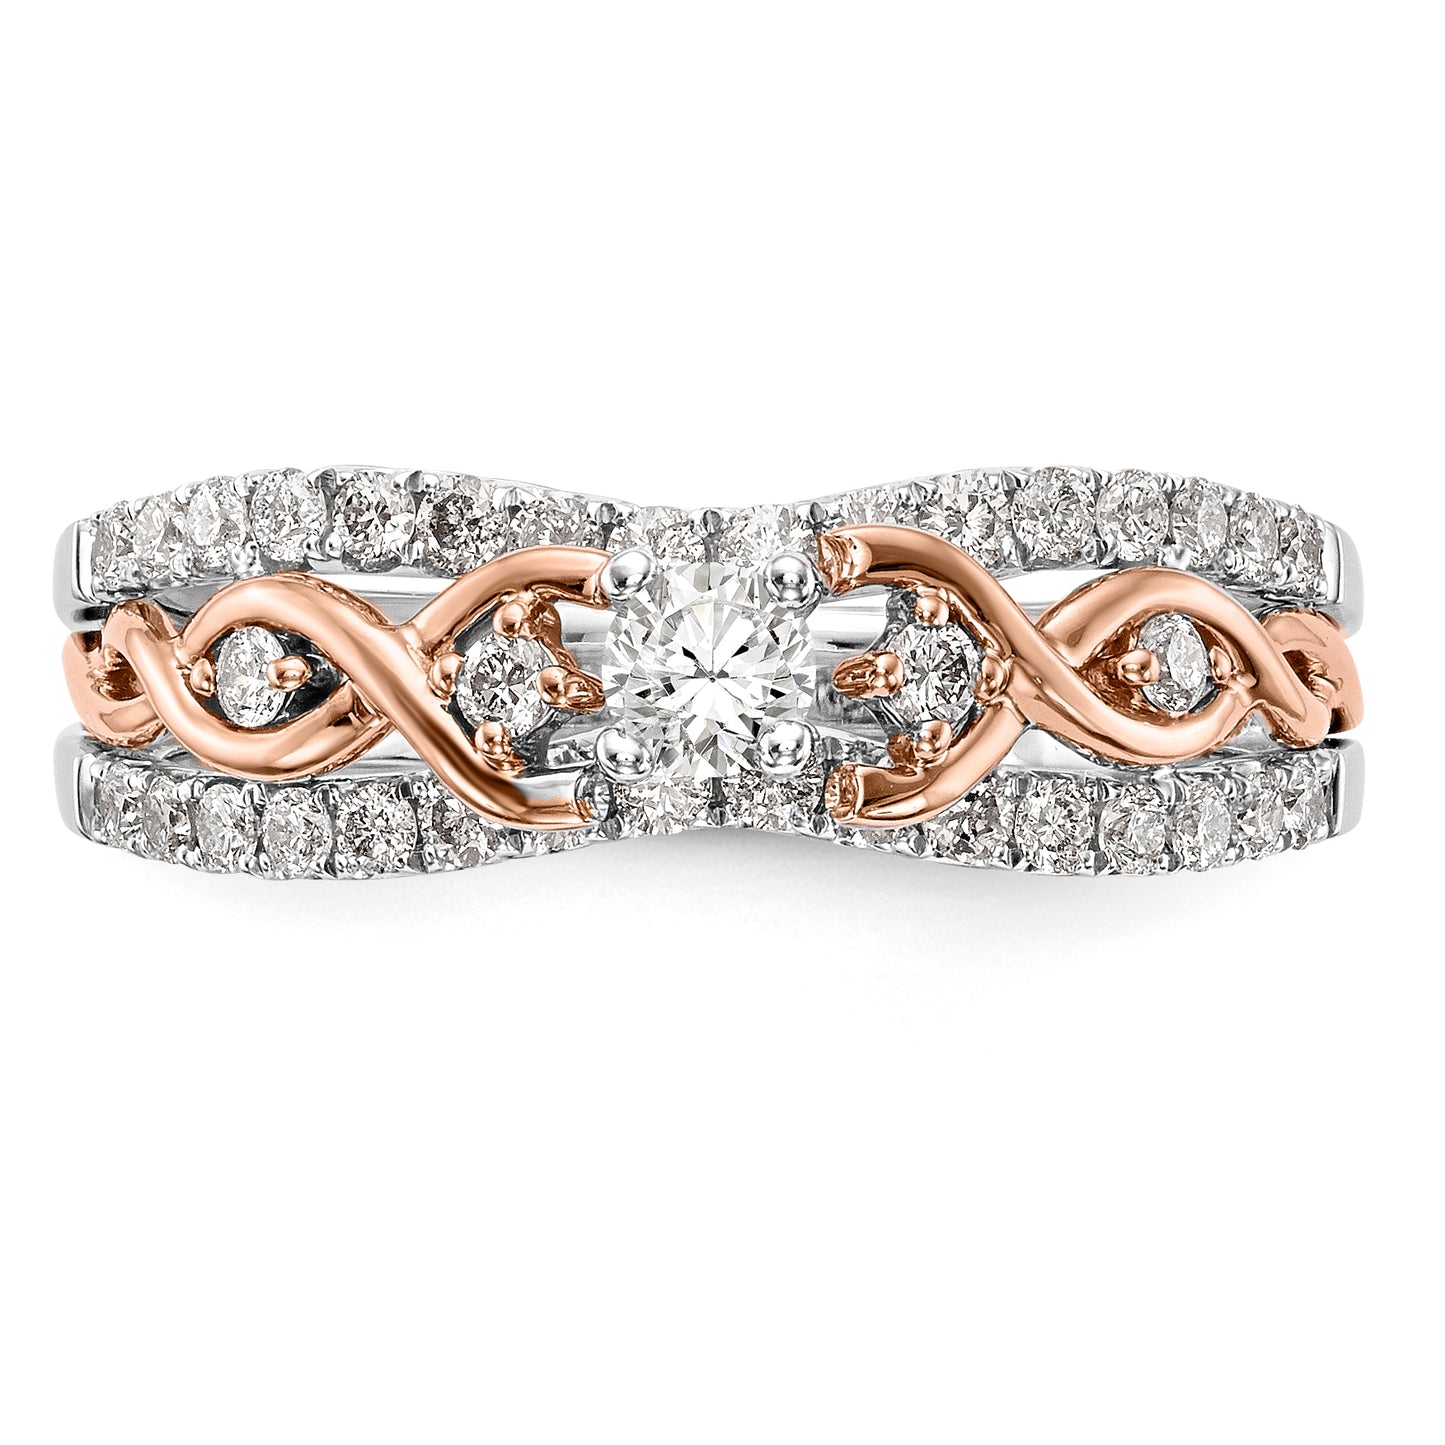 14k White Gold and Rose Gold Peg Set Diamond Engagement Ring